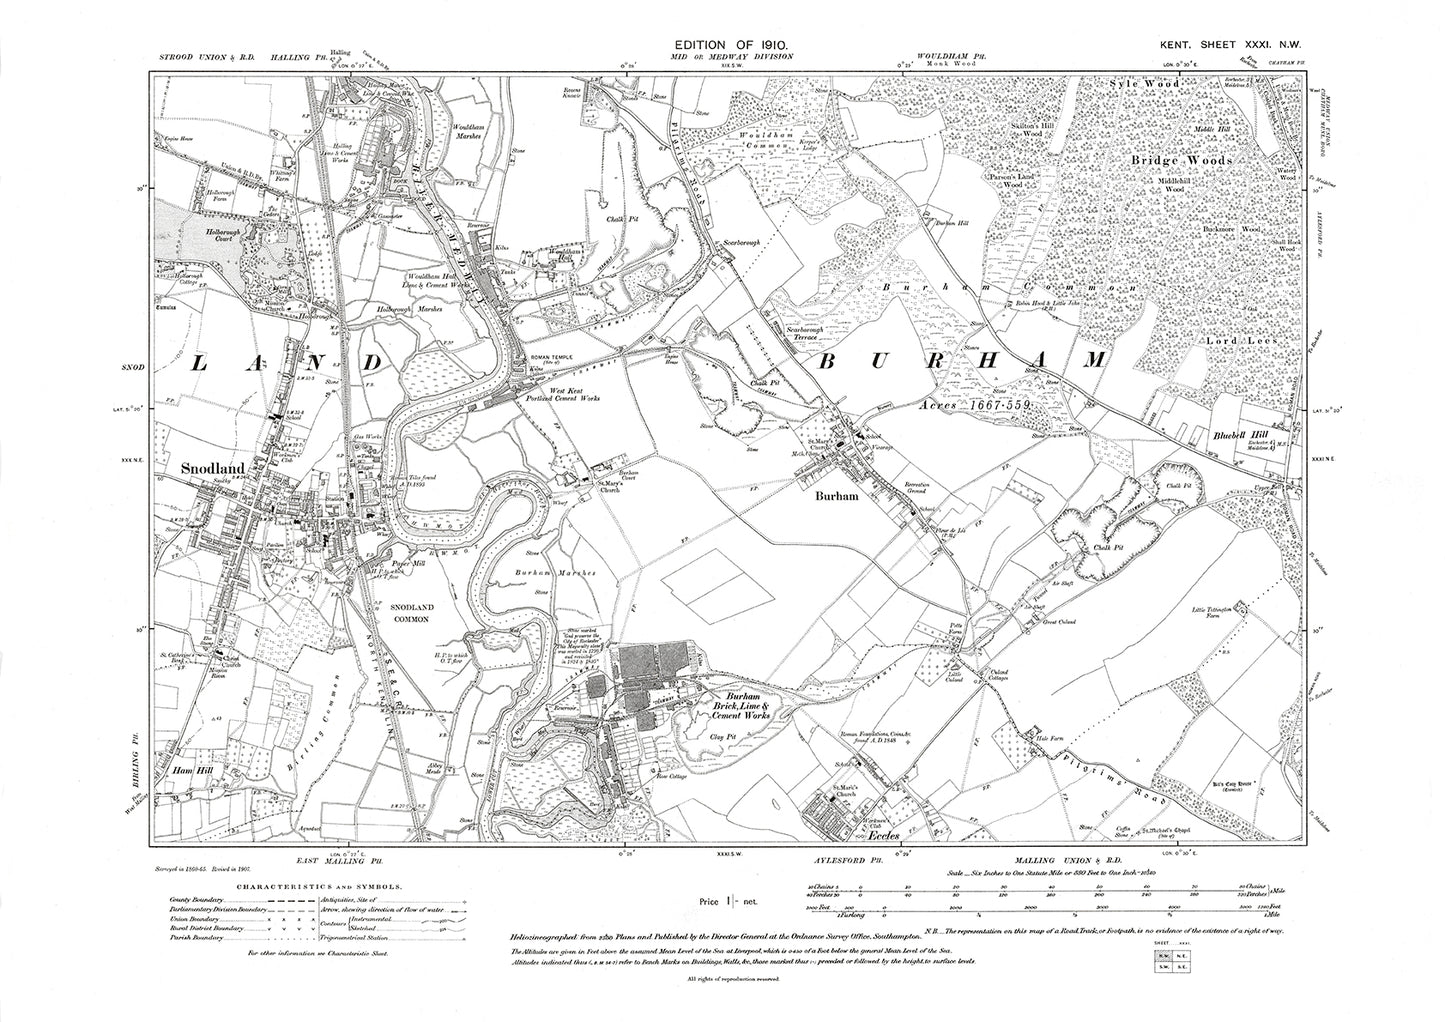 Snodland Burham, Eccles (north), old map Kent 1910: 31NW